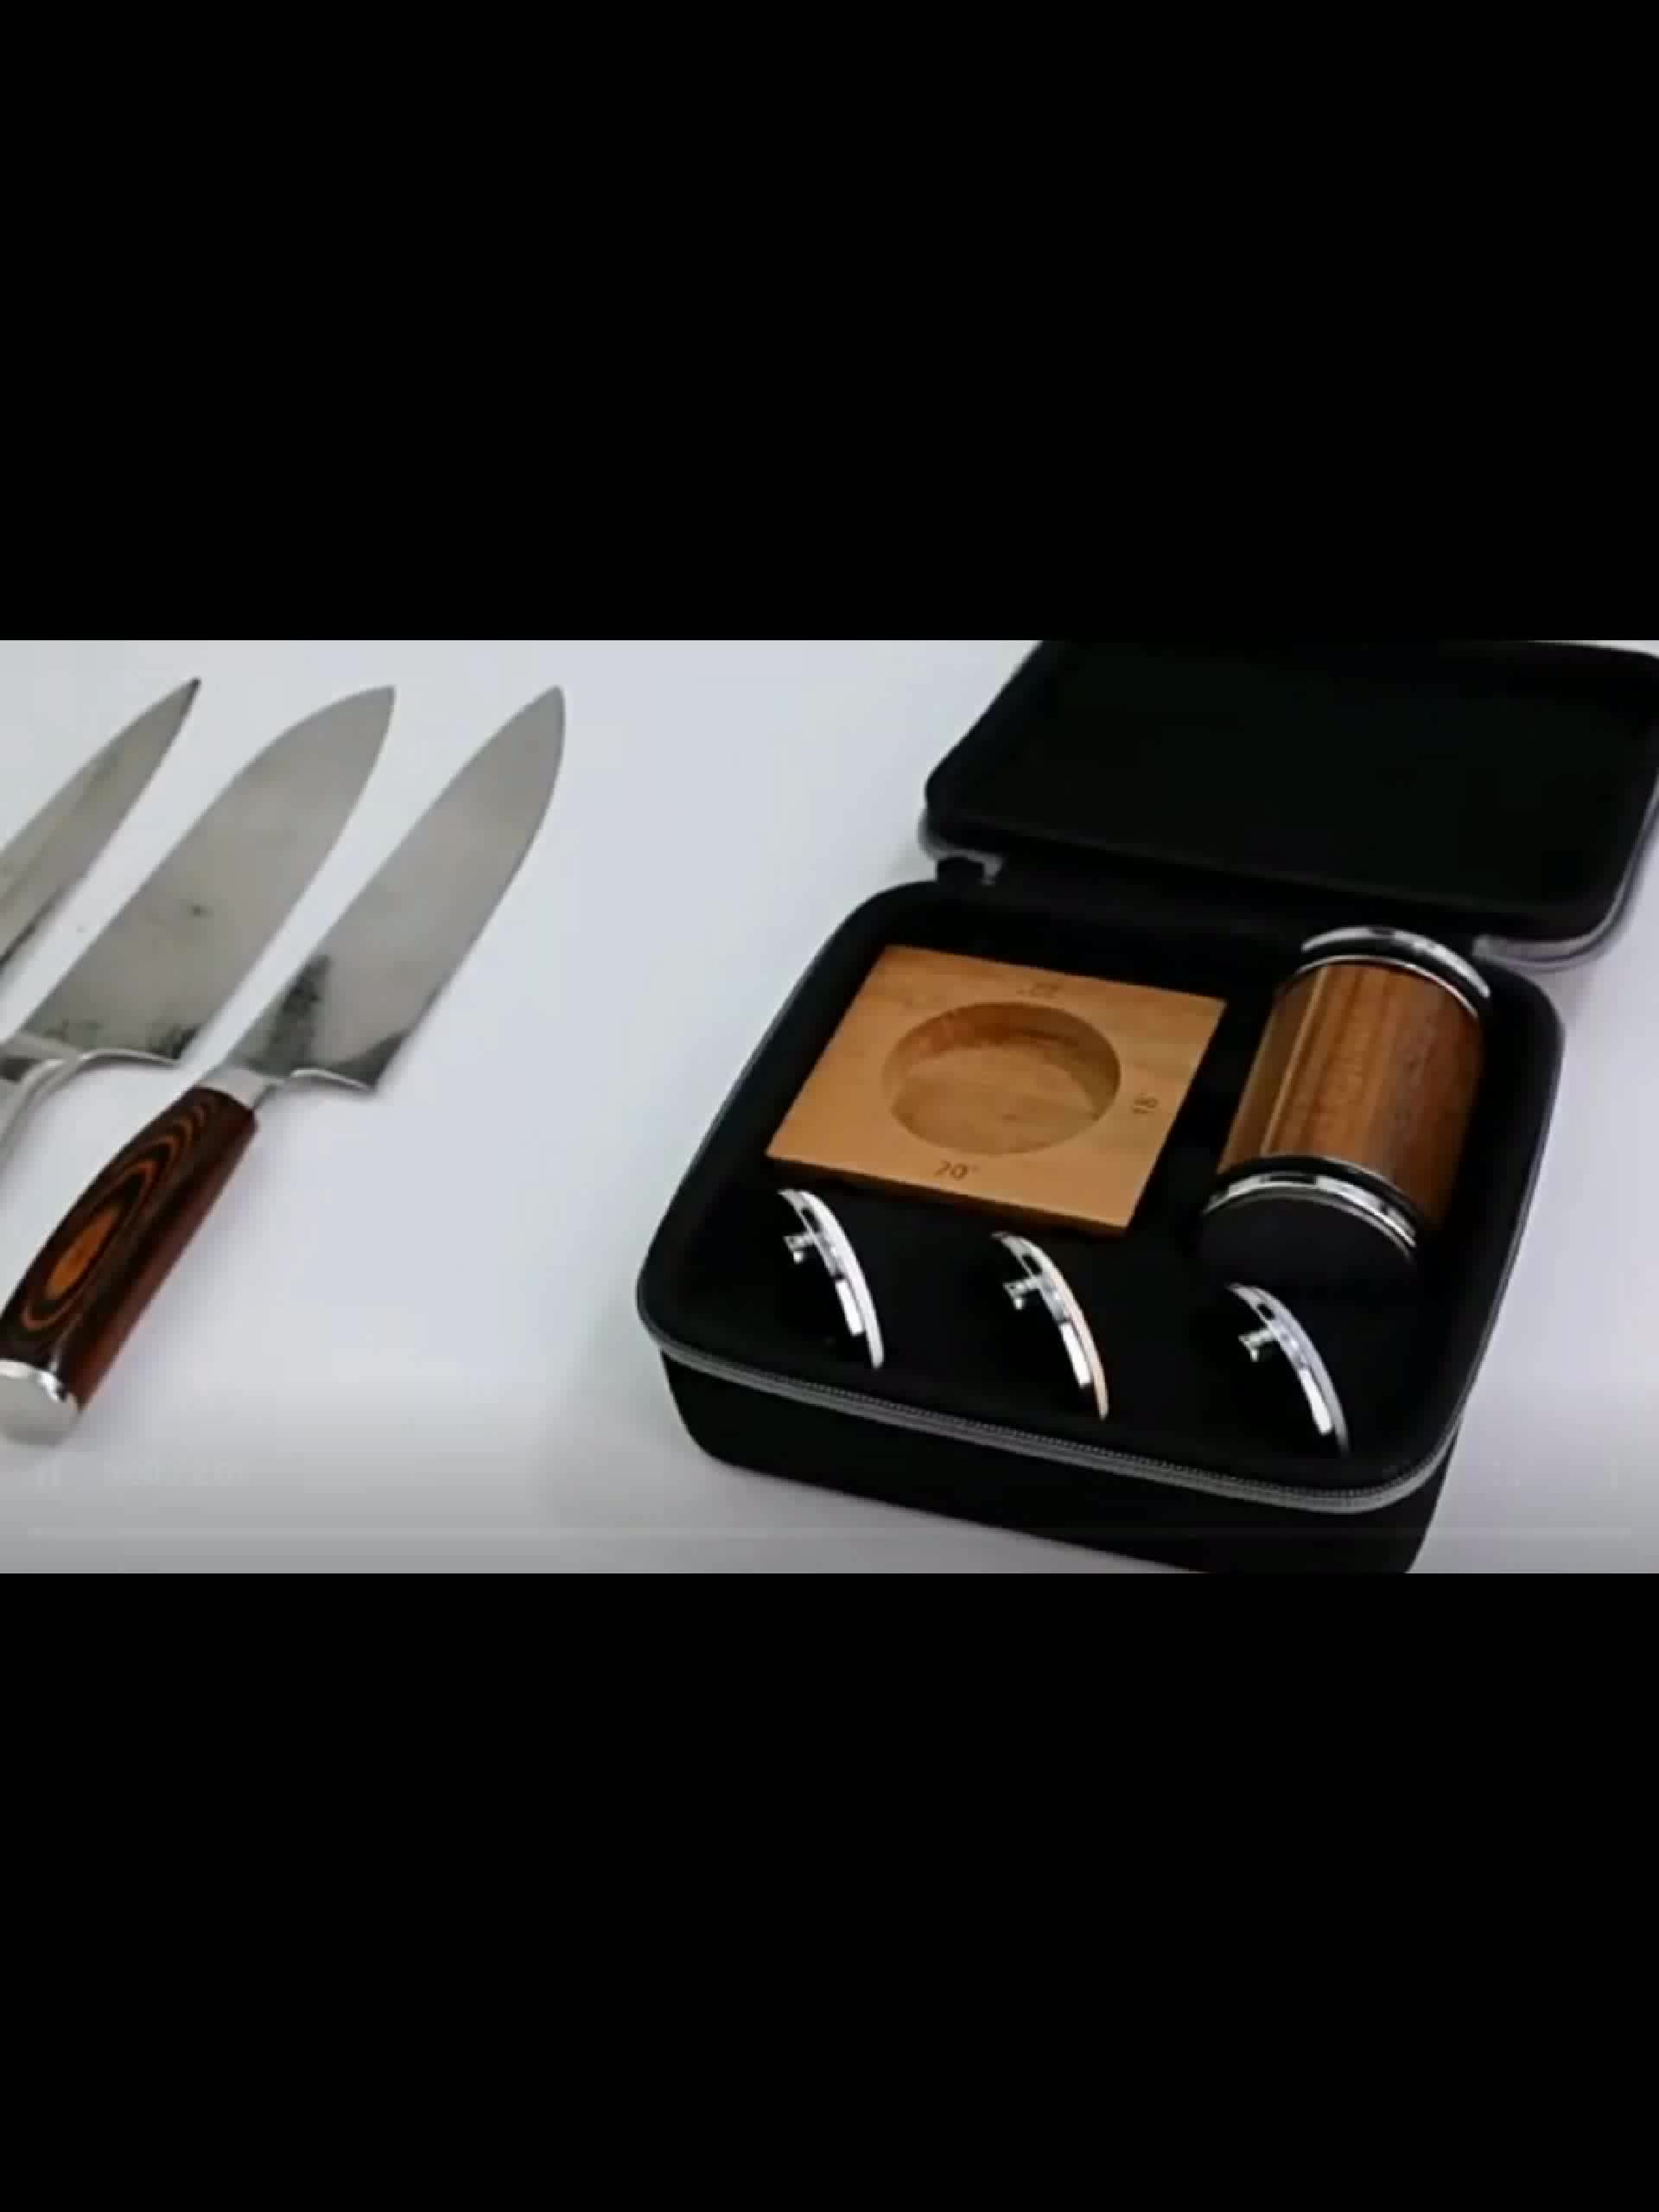 Knife Sharpening Knife Sharpener Rolling Knives Sharpeners - Temu